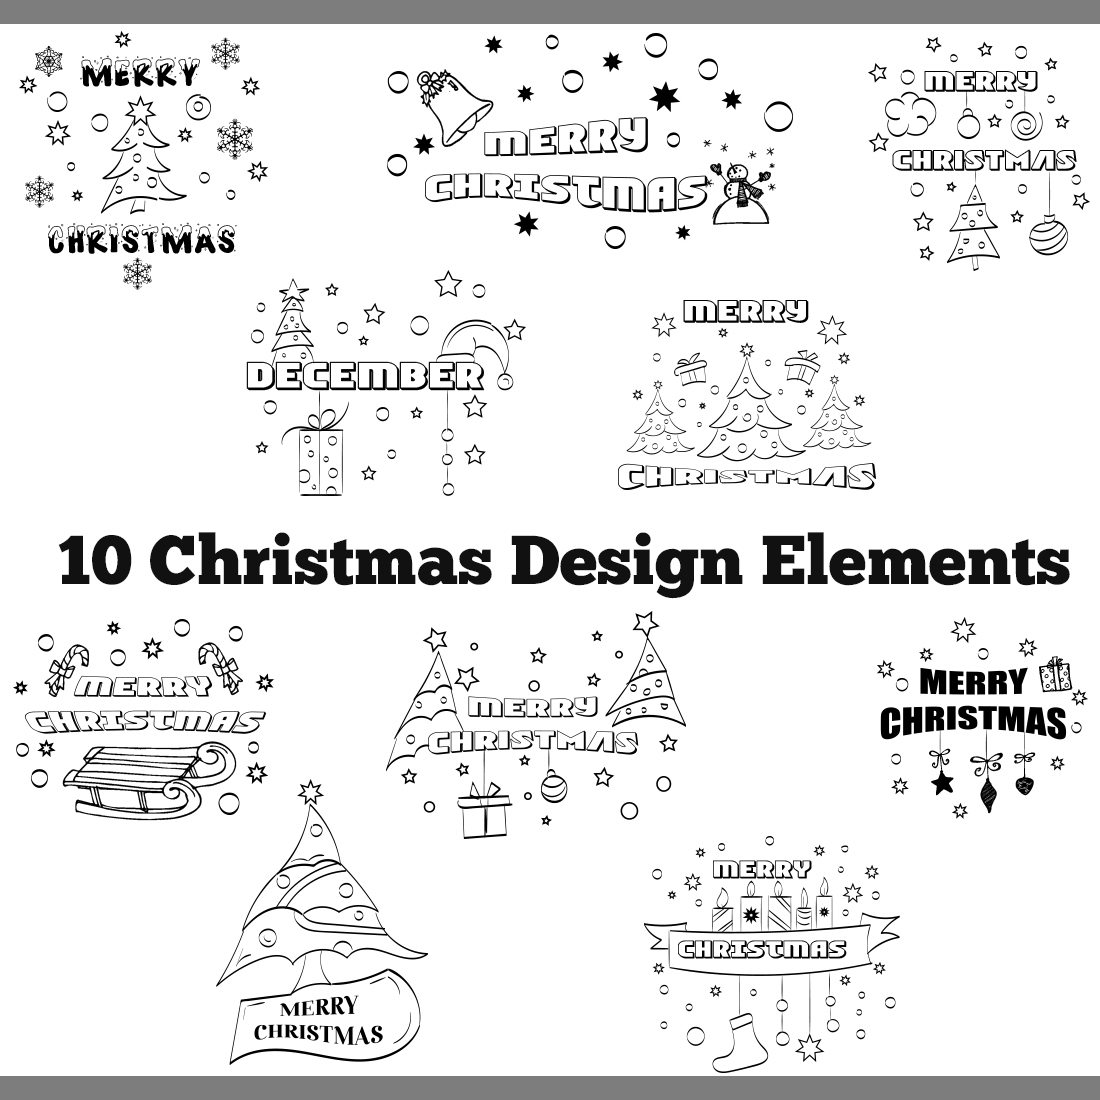 Elegant Christmas Quotes Design Elements cover image.